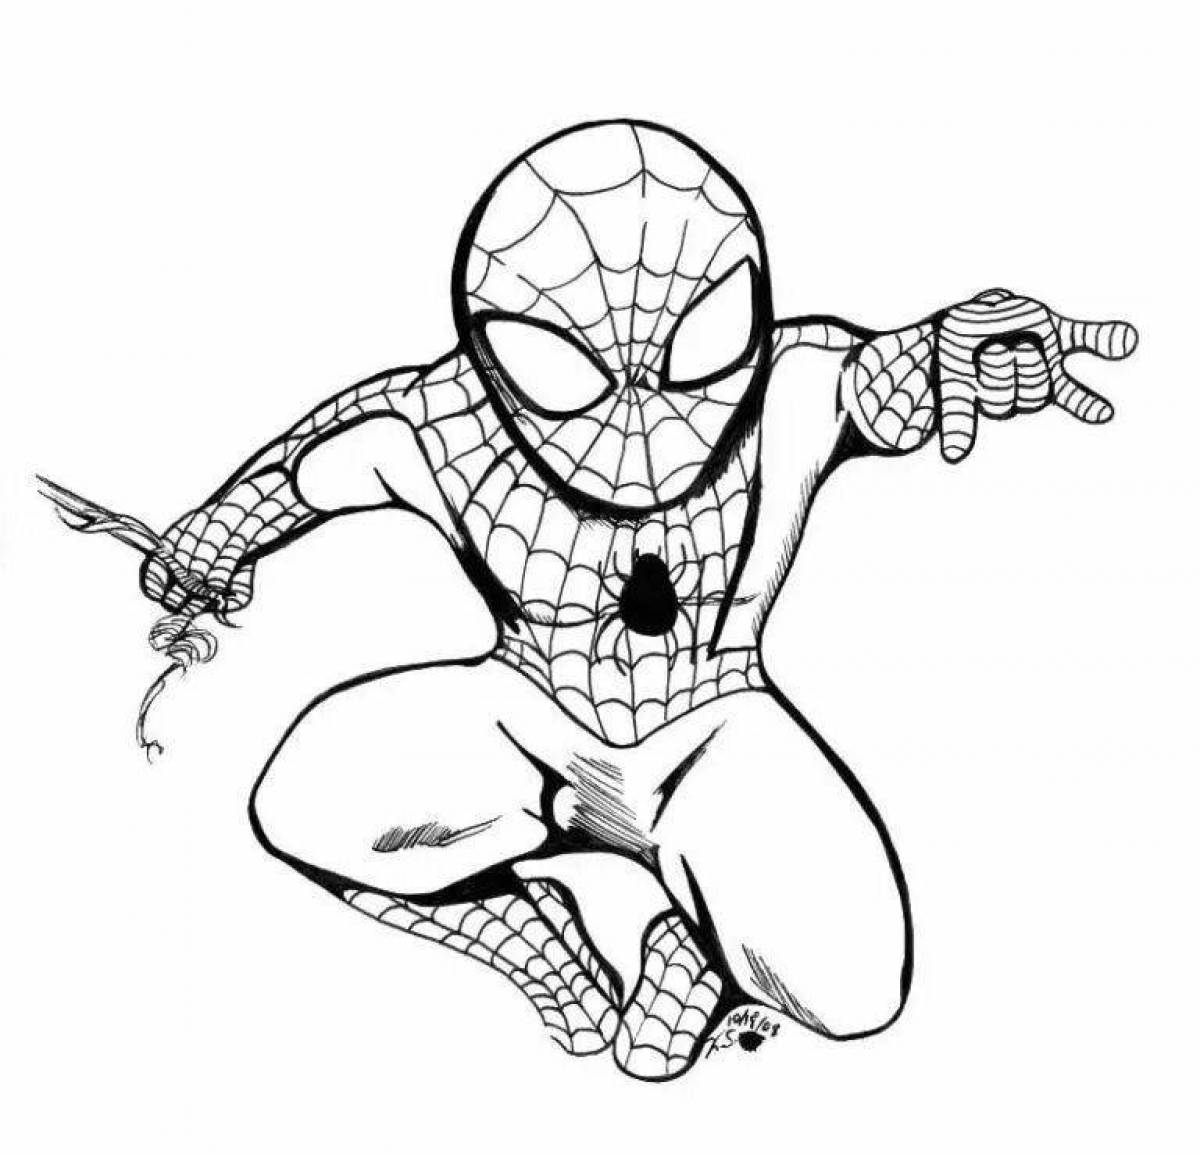 Amazing drawing of Spiderman